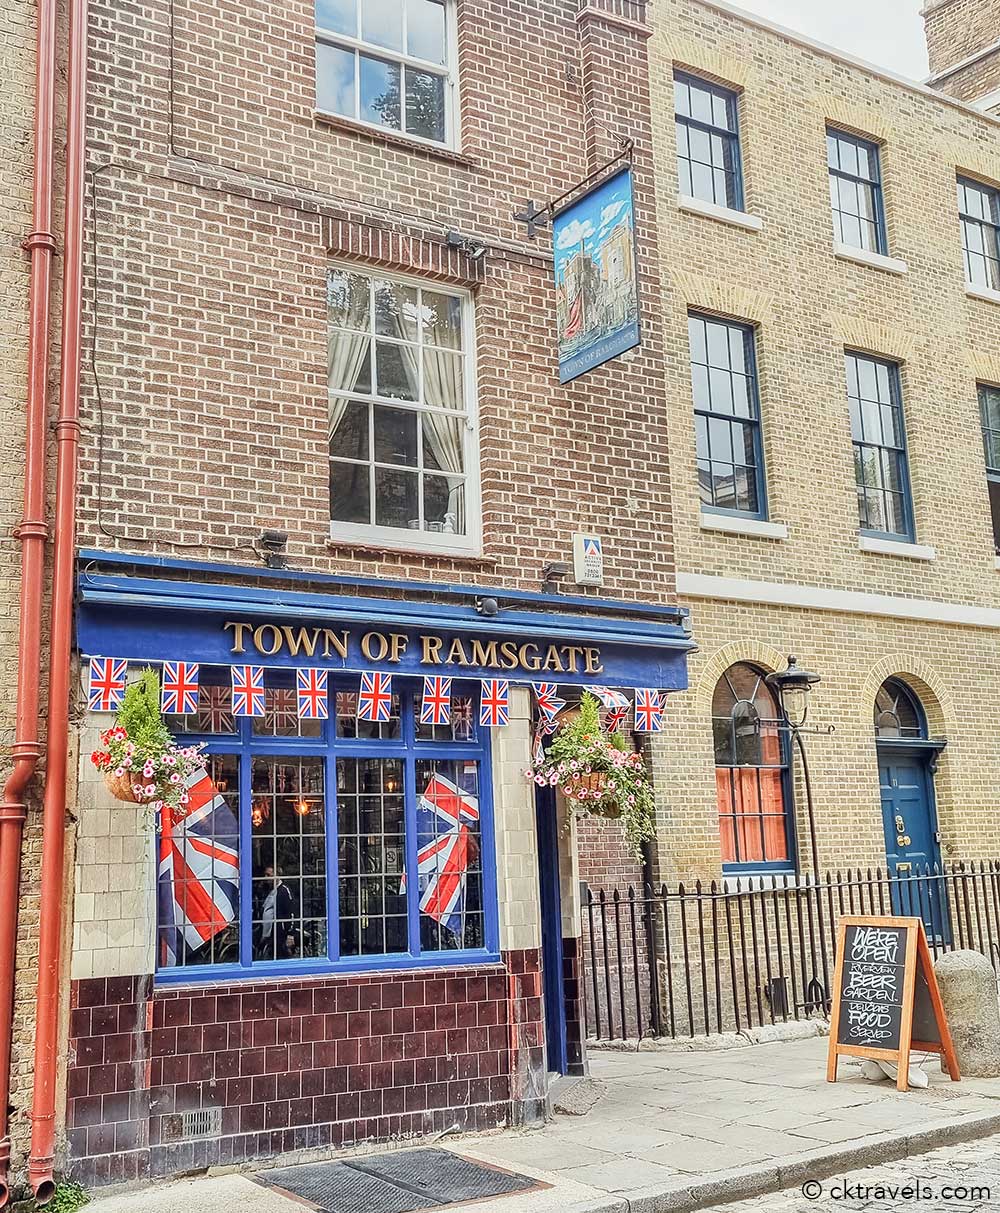 The Town of Ramsgate river pub London